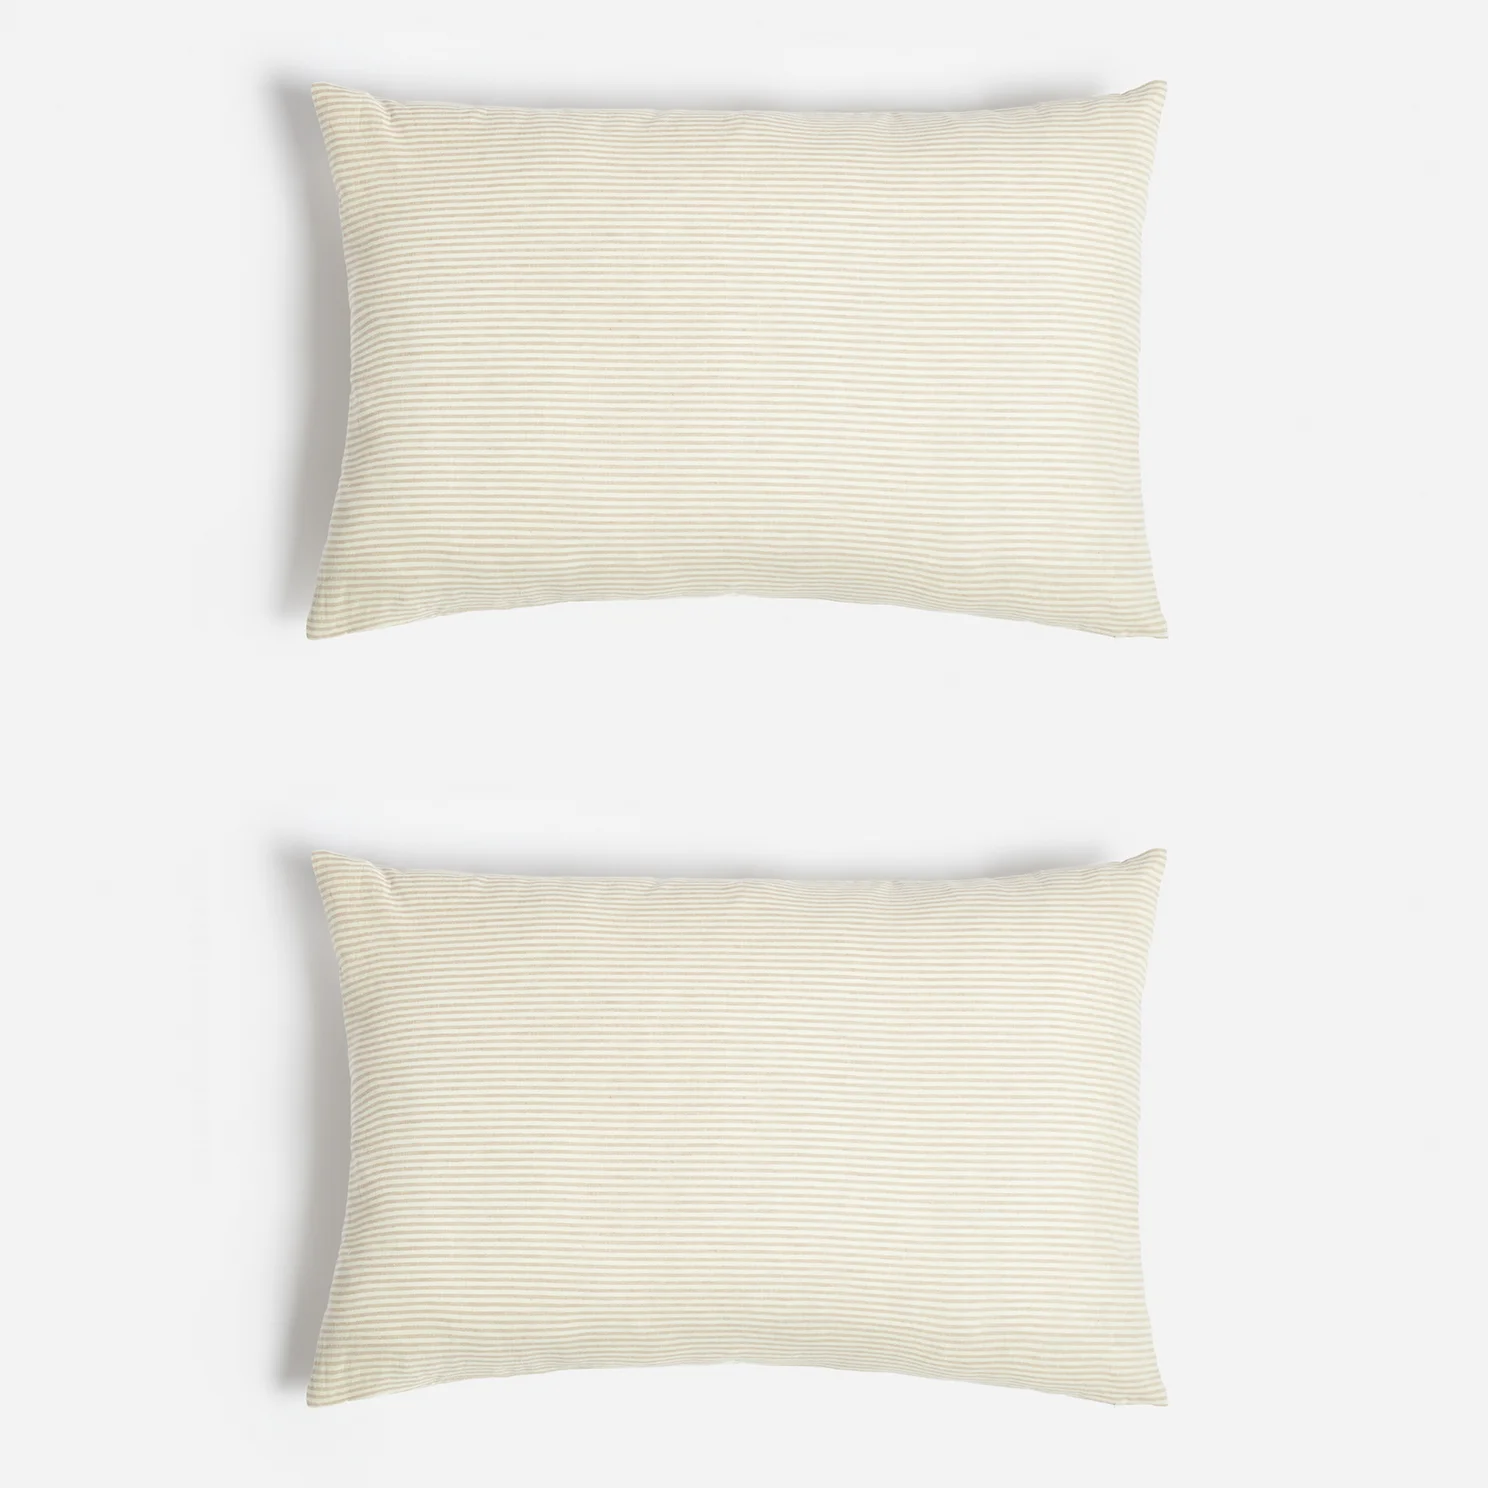 ïn home Linen Cotton Stripe Cushion Cover - Natural - 75x50cm - Set of 2 Image 1